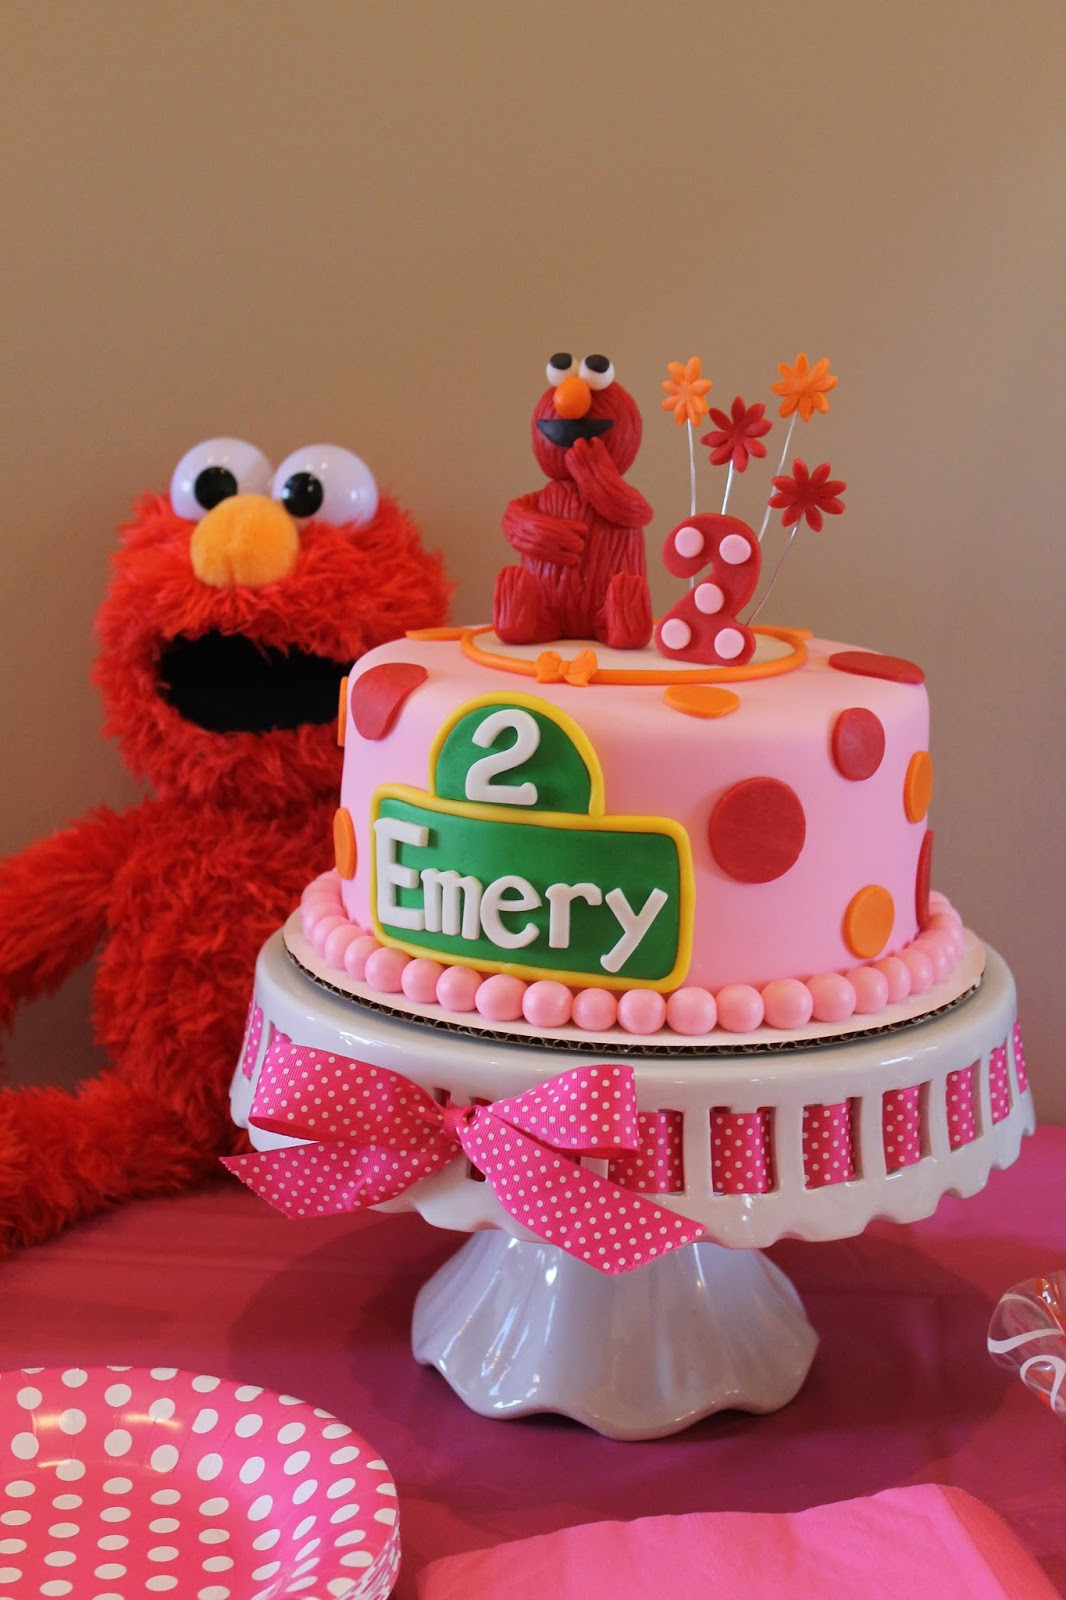 Elmo Birthday Cakes
 Richly Blessed Emery Turns TWO Elmo Birthday Party